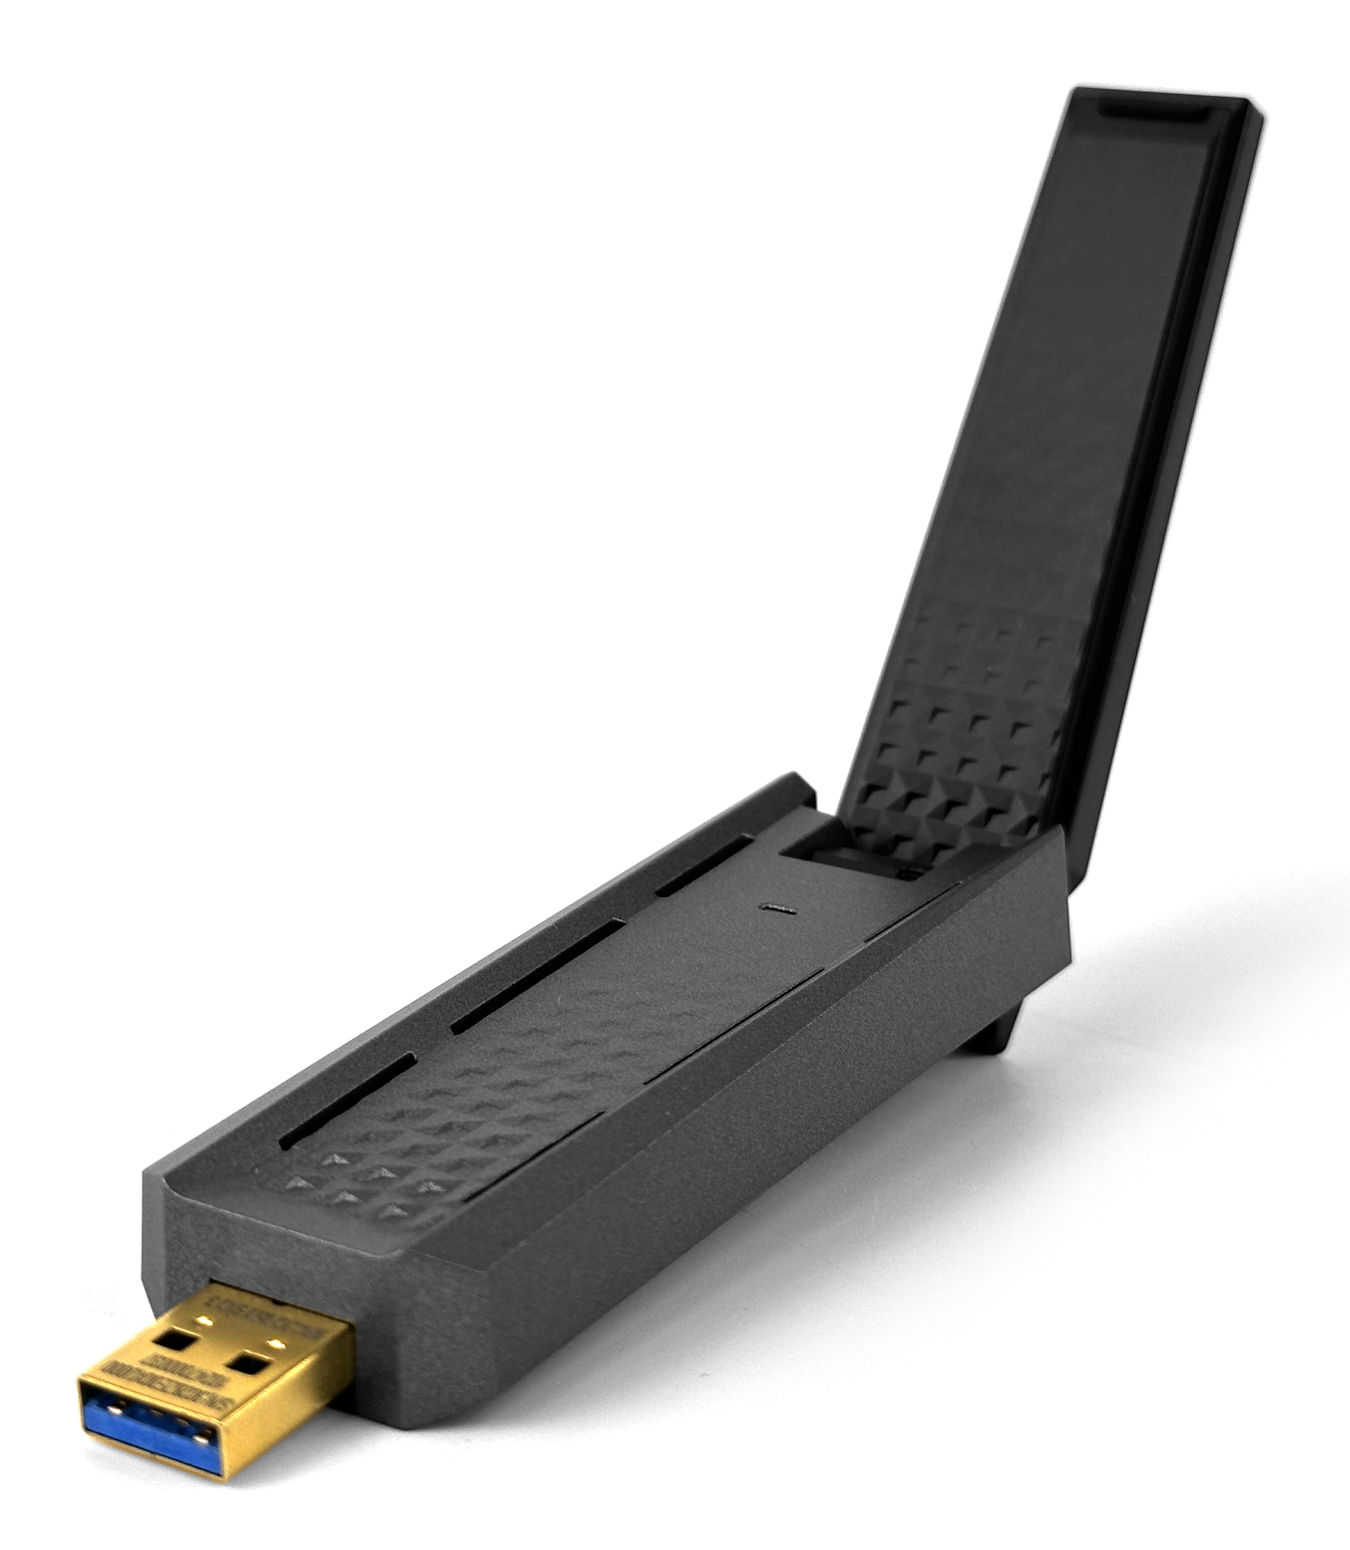 AX1800 WiFi USB